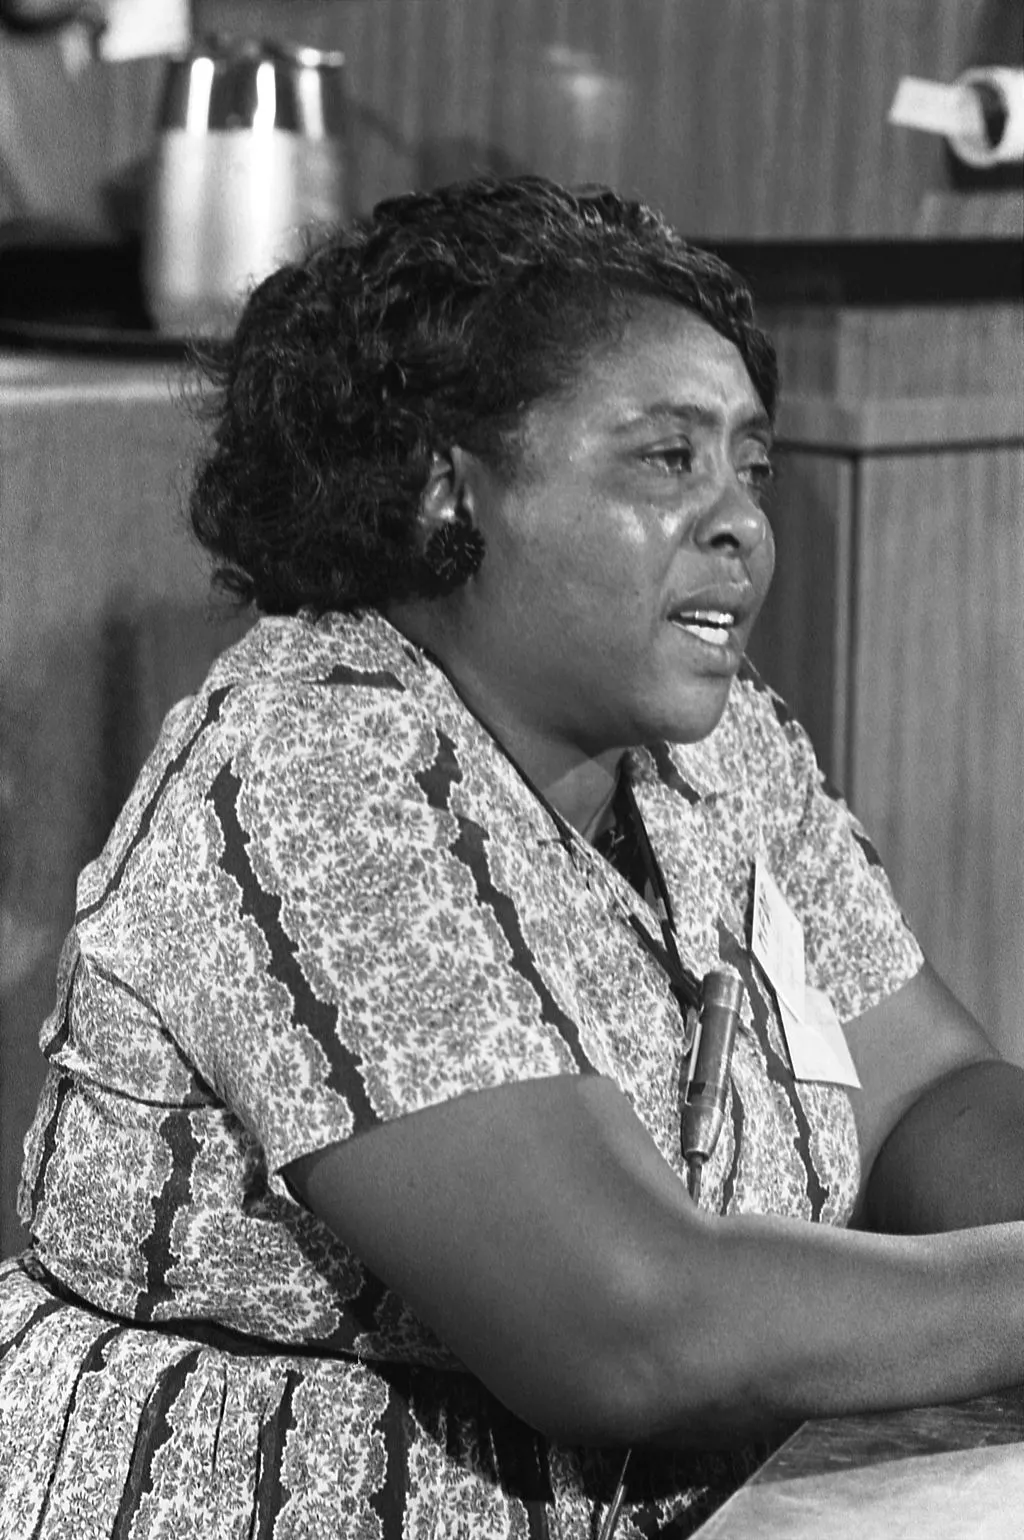 Black woman speaking. Black and white image